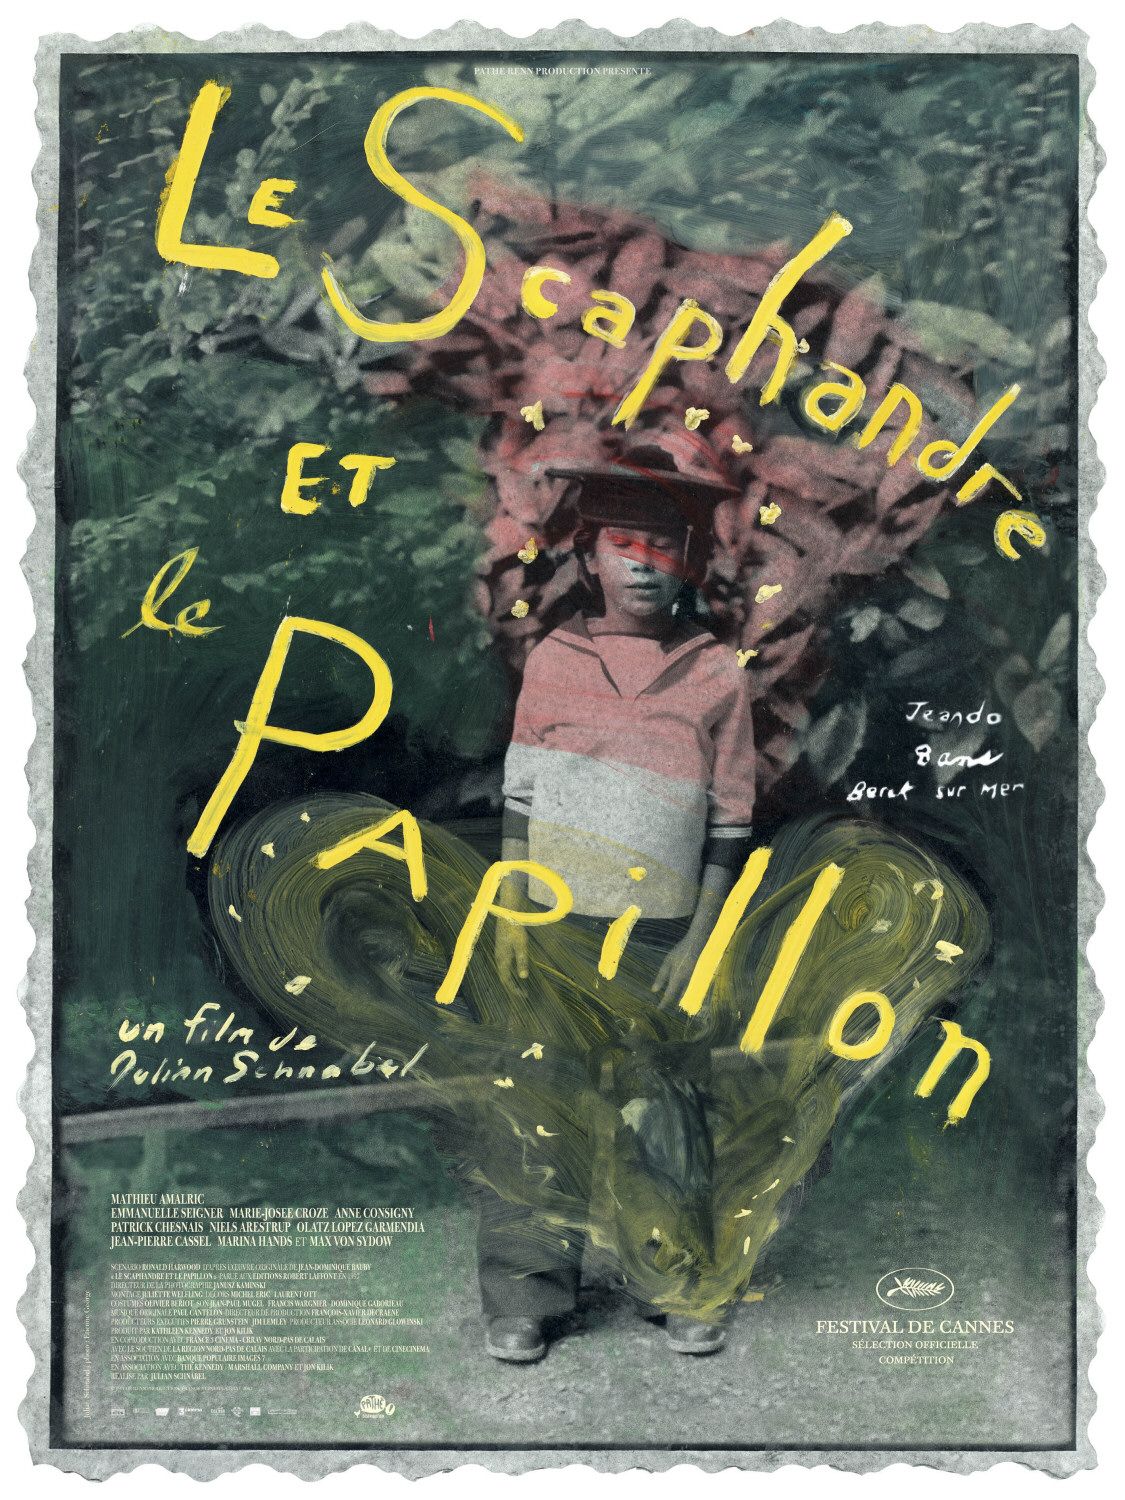 Extra Large Movie Poster Image for Scaphandre et le papillon, Le